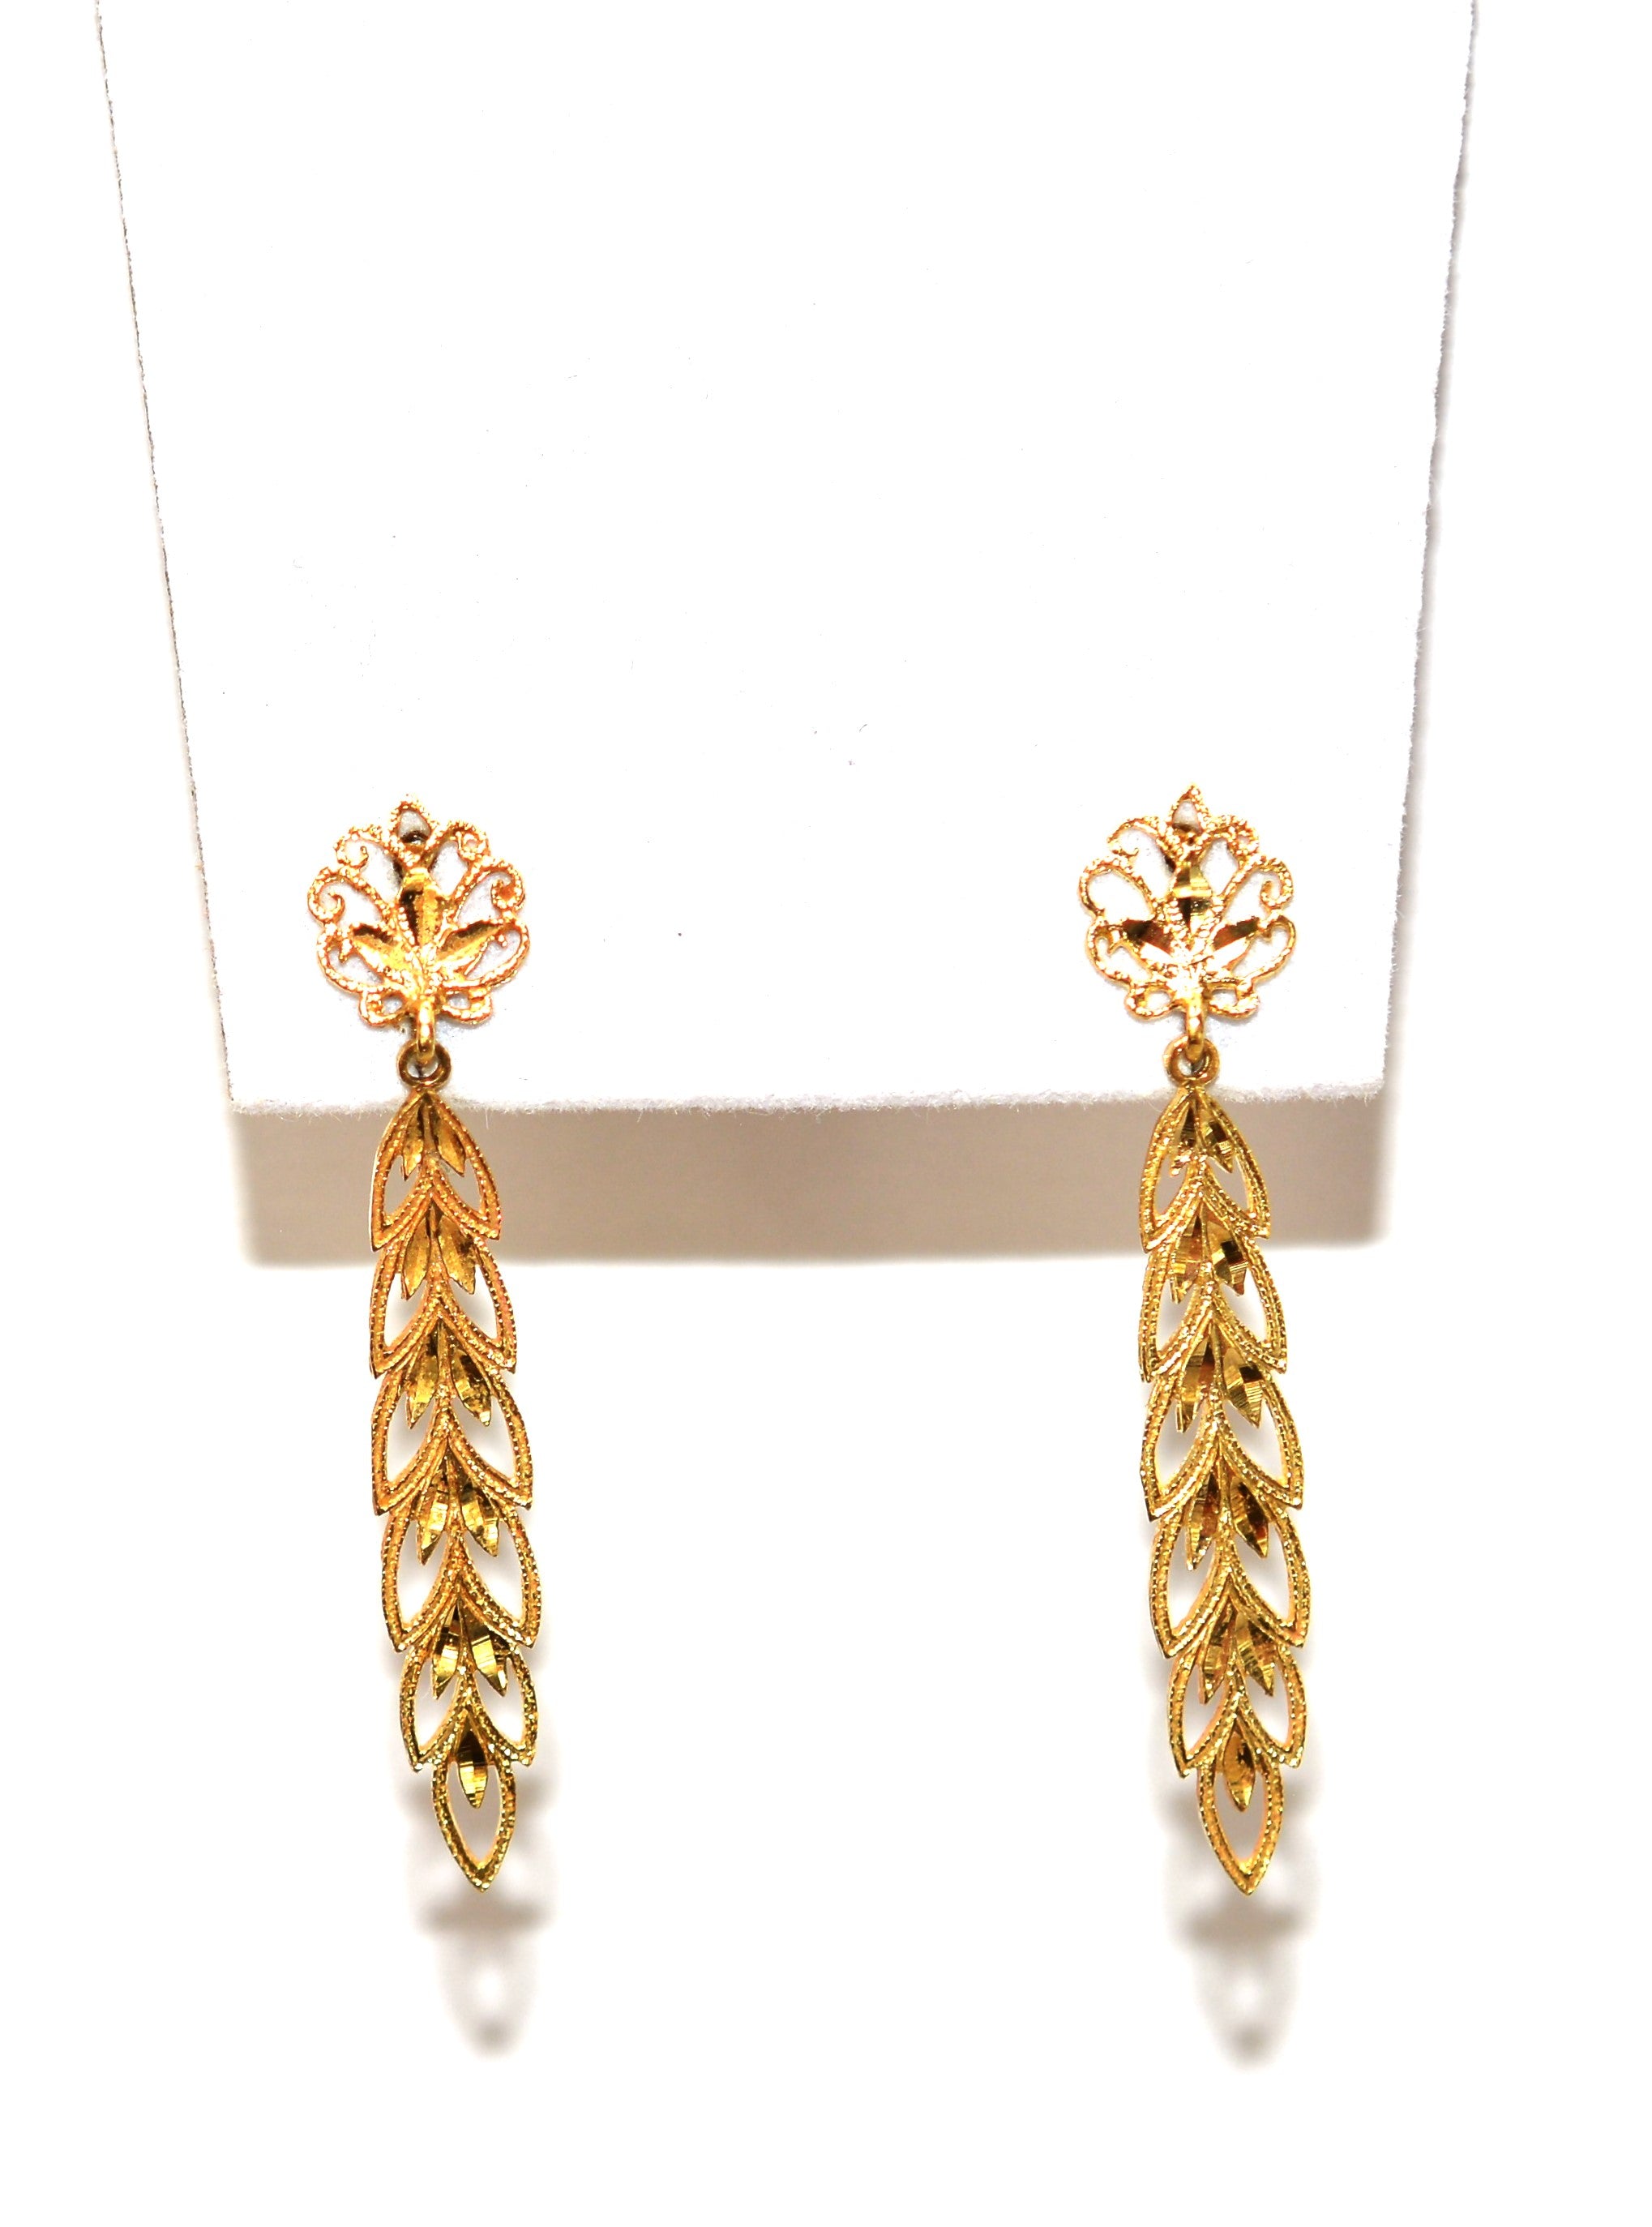 Gold Long Chandelier Earrings Manufacturer,Supplier, Exporter,